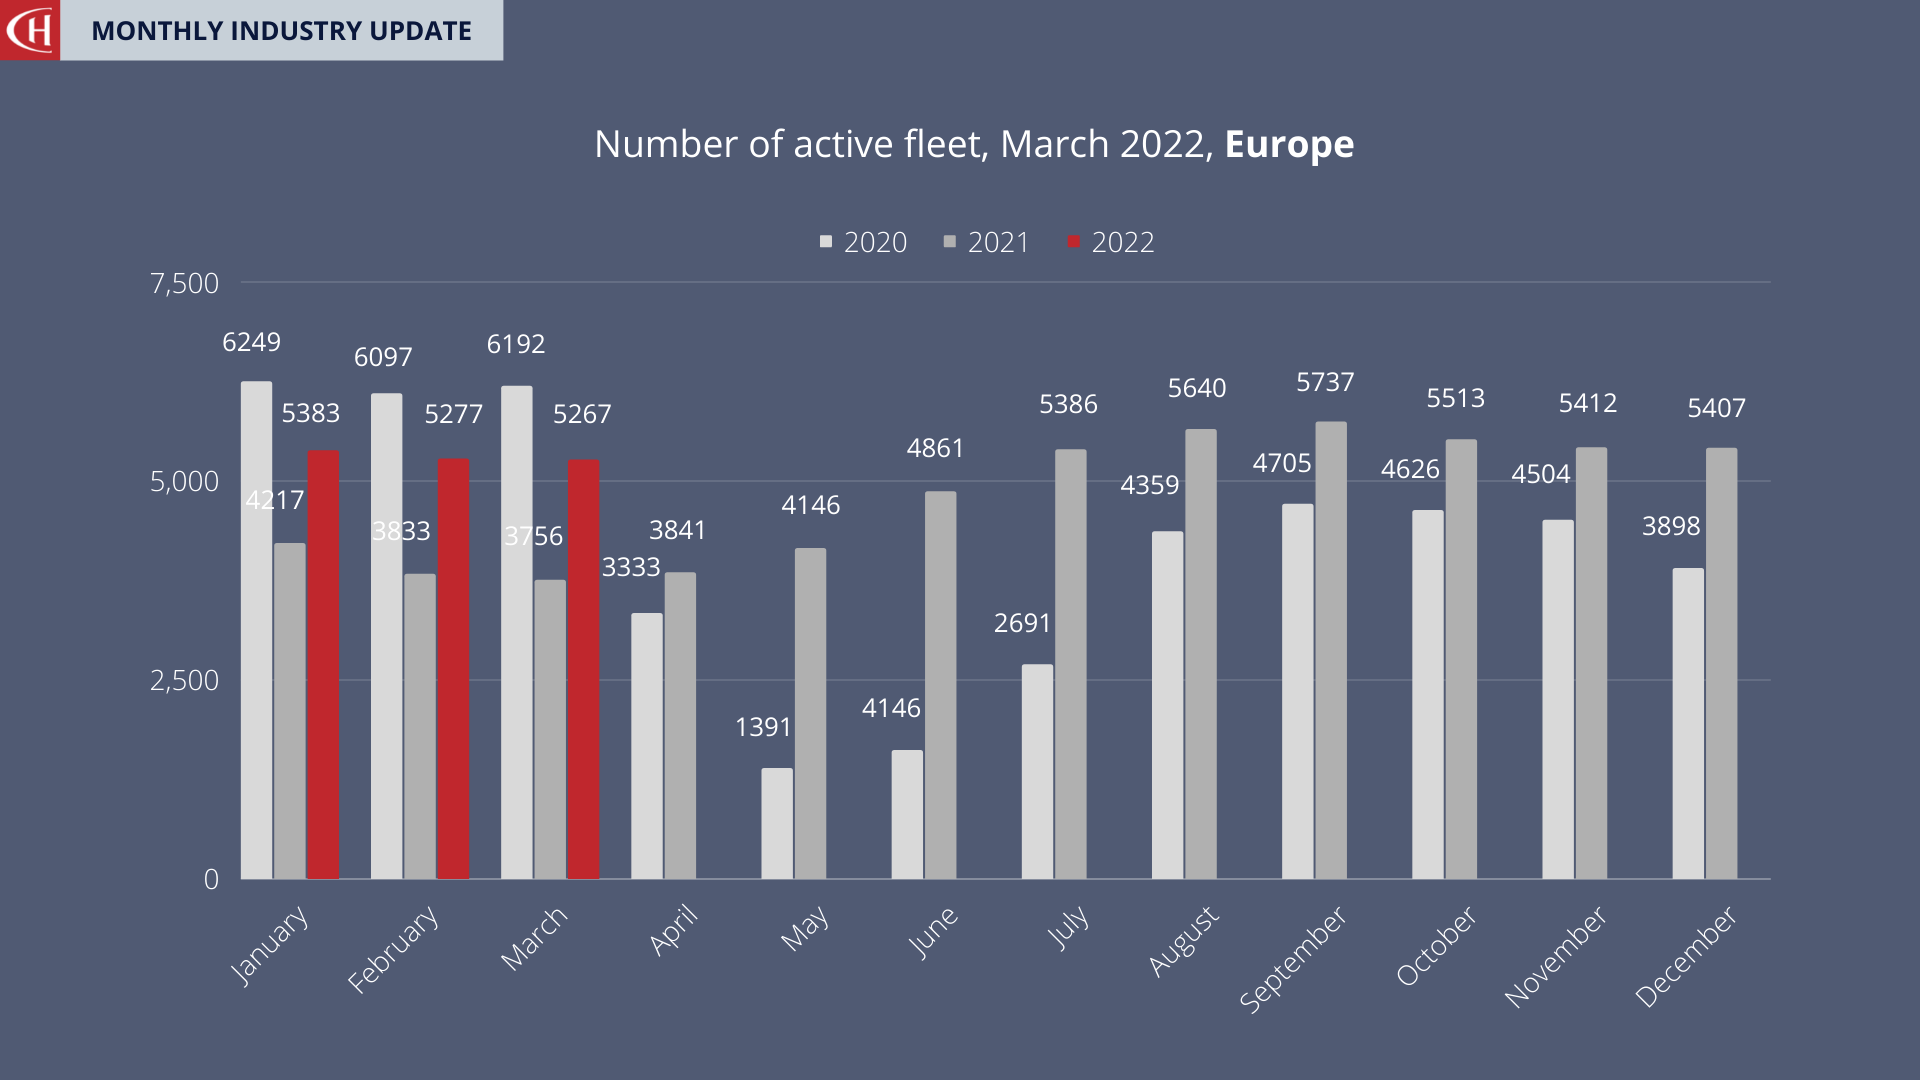 Europe Fleet Size March 2022